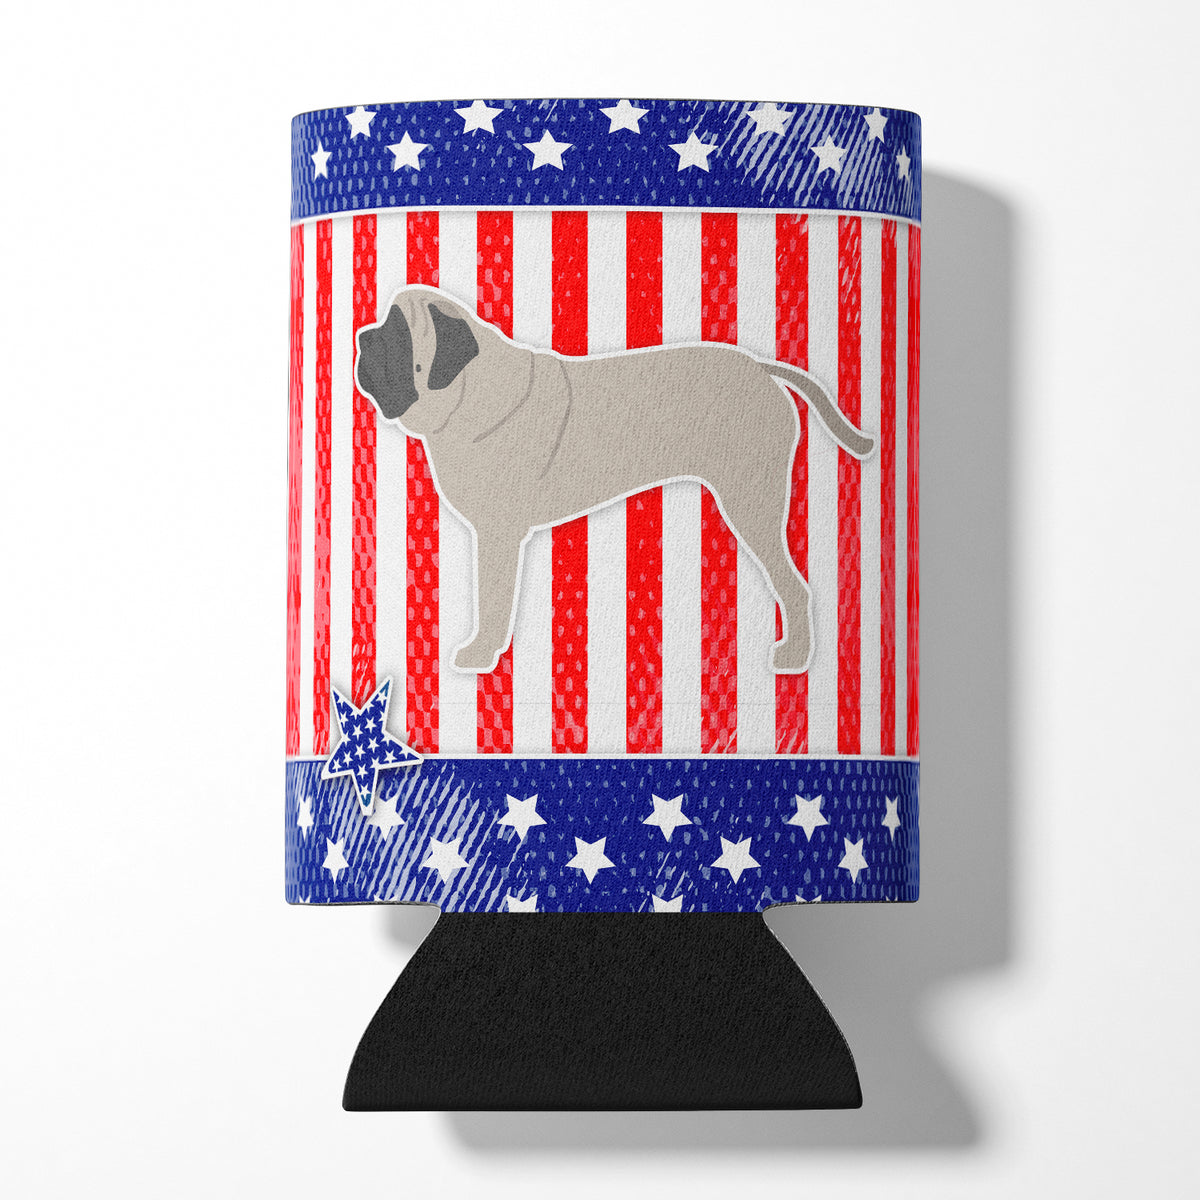 USA Patriotic English Mastiff Can or Bottle Hugger BB3356CC  the-store.com.